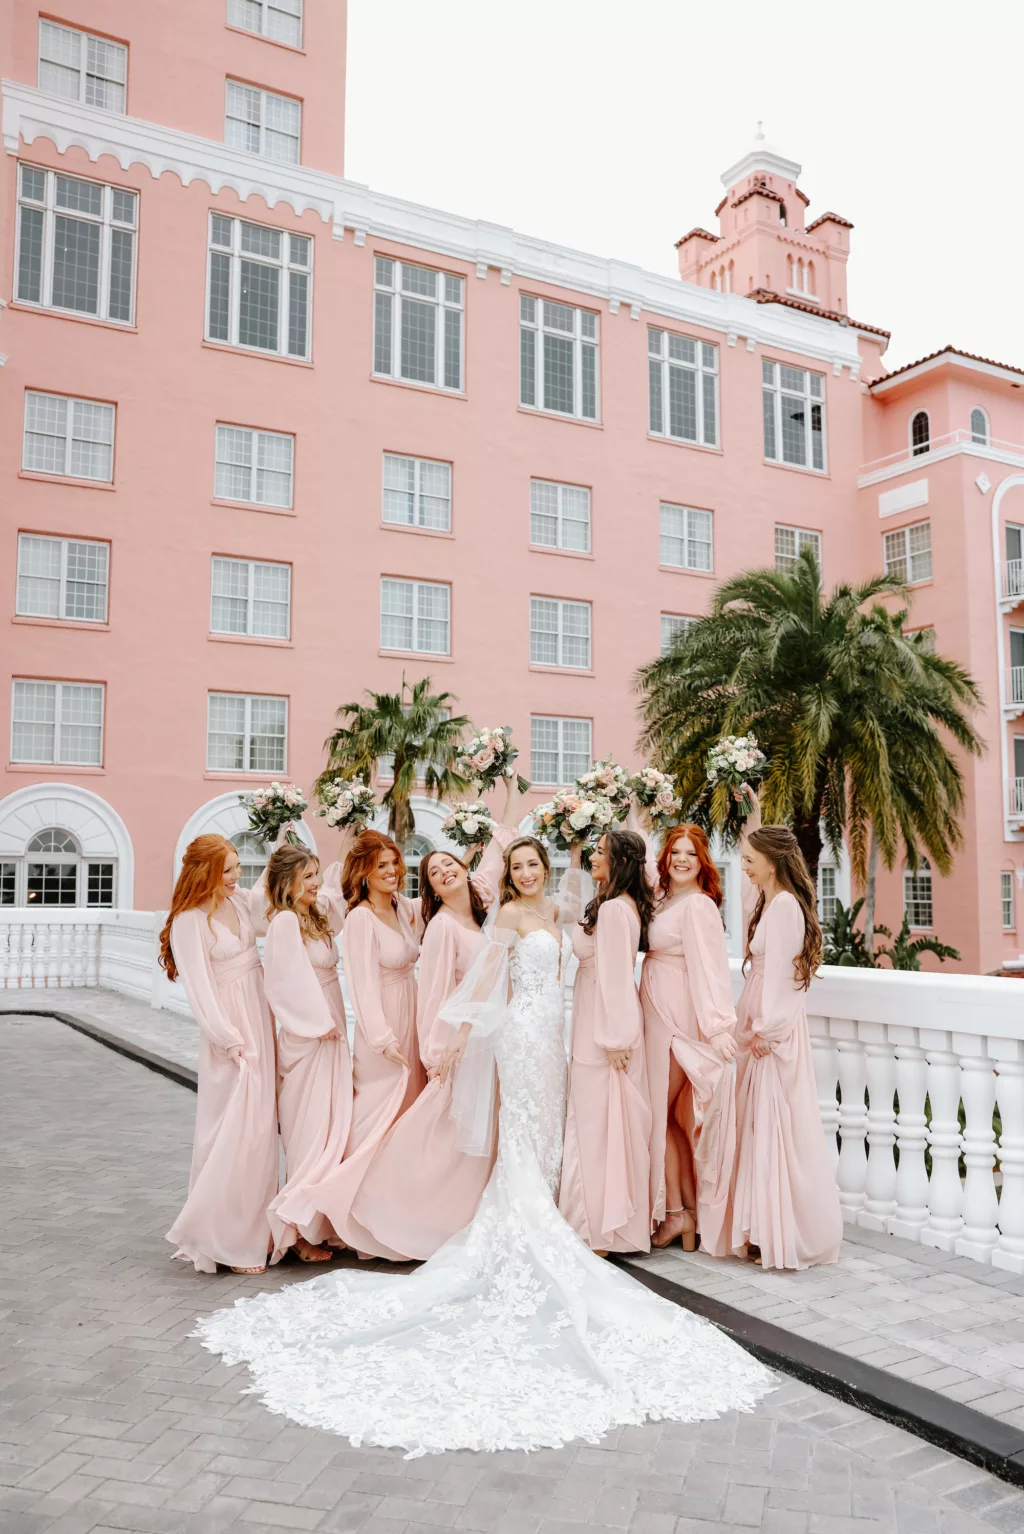 Long Sleeve Blush Bridesmaids Wedding Dress Inspiration | St. Pete Event Venue The Don CeSar | Photographer Lifelong Photography Studio